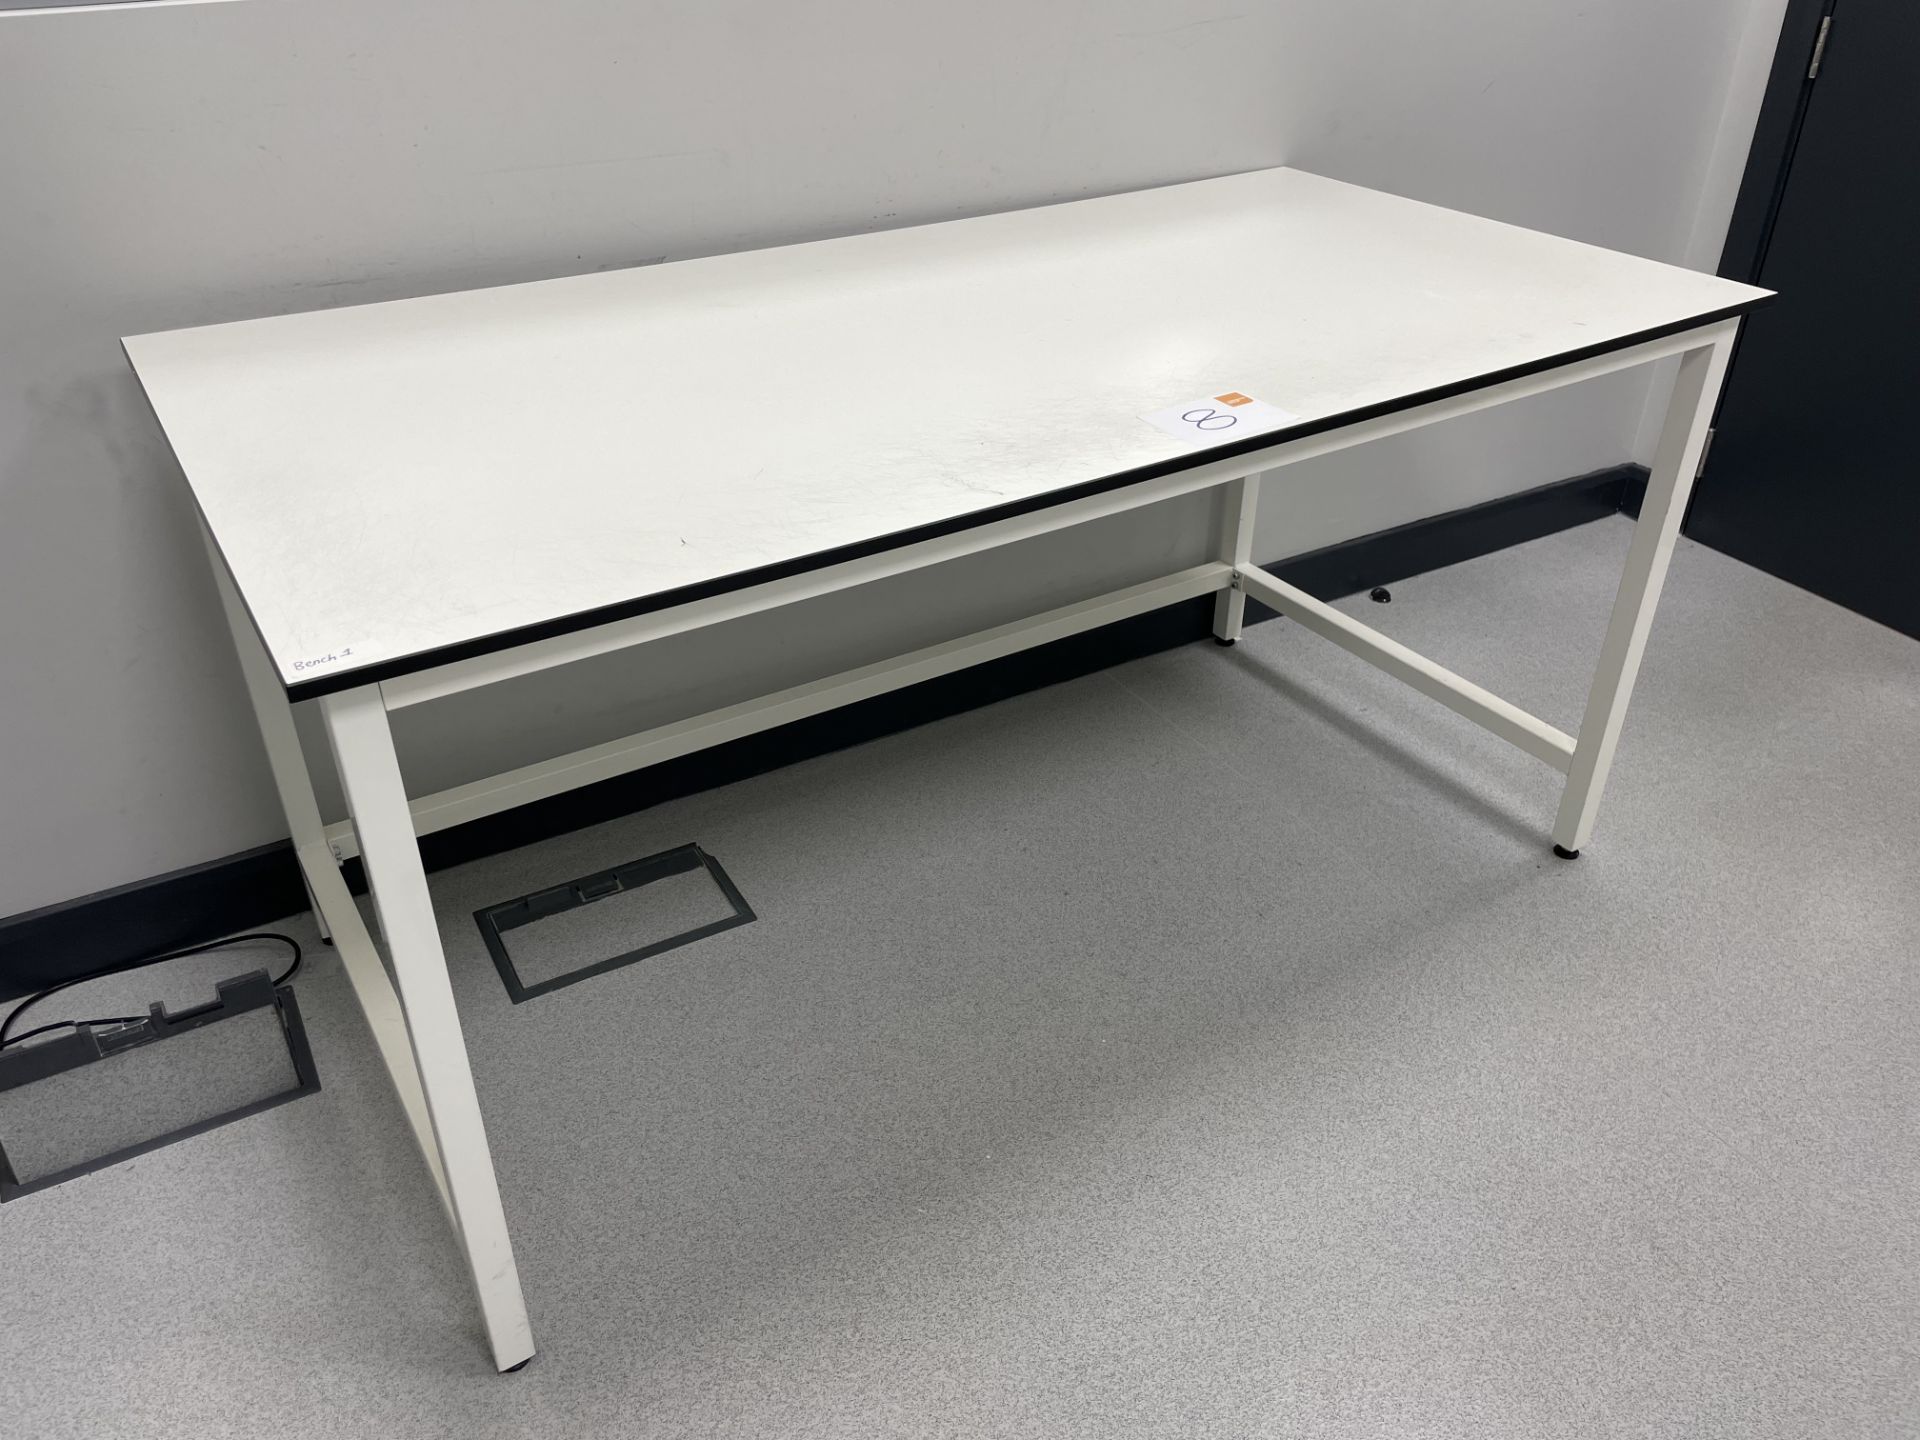 A Laboratory bench, 180cm x 60cm x 89cm h.